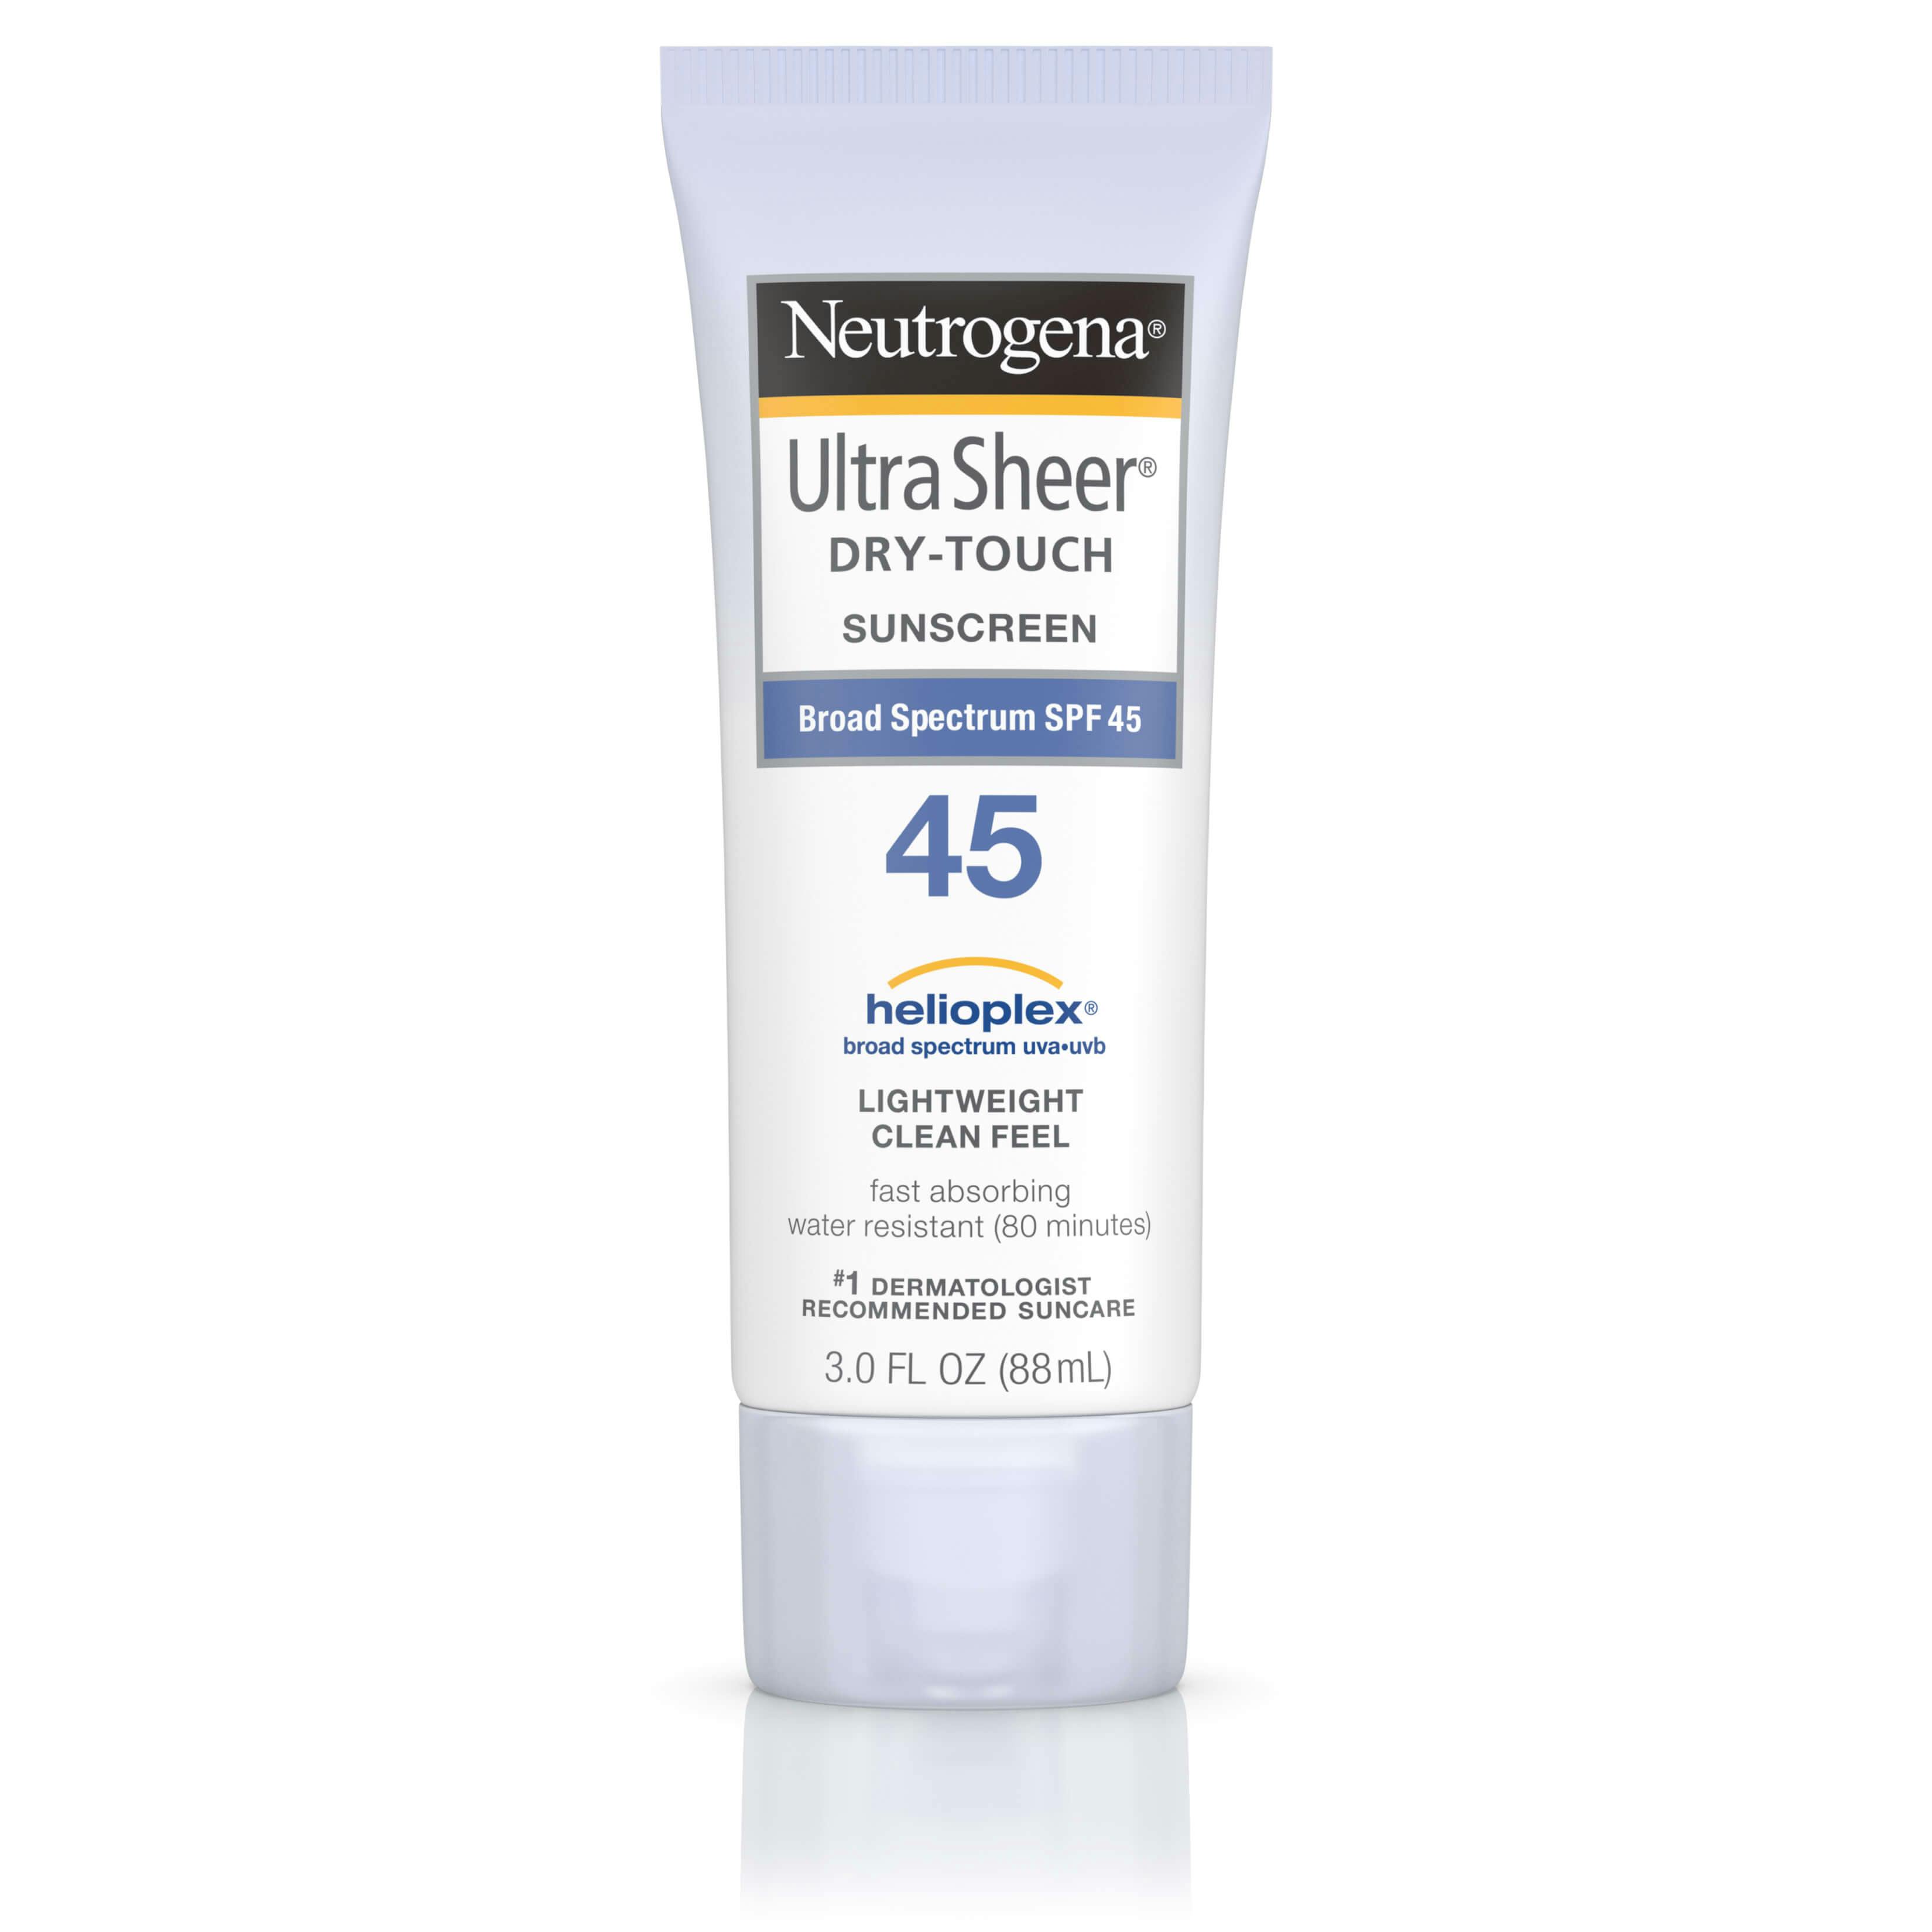 neutrogena ultra sheer dry touch sunscreen recall